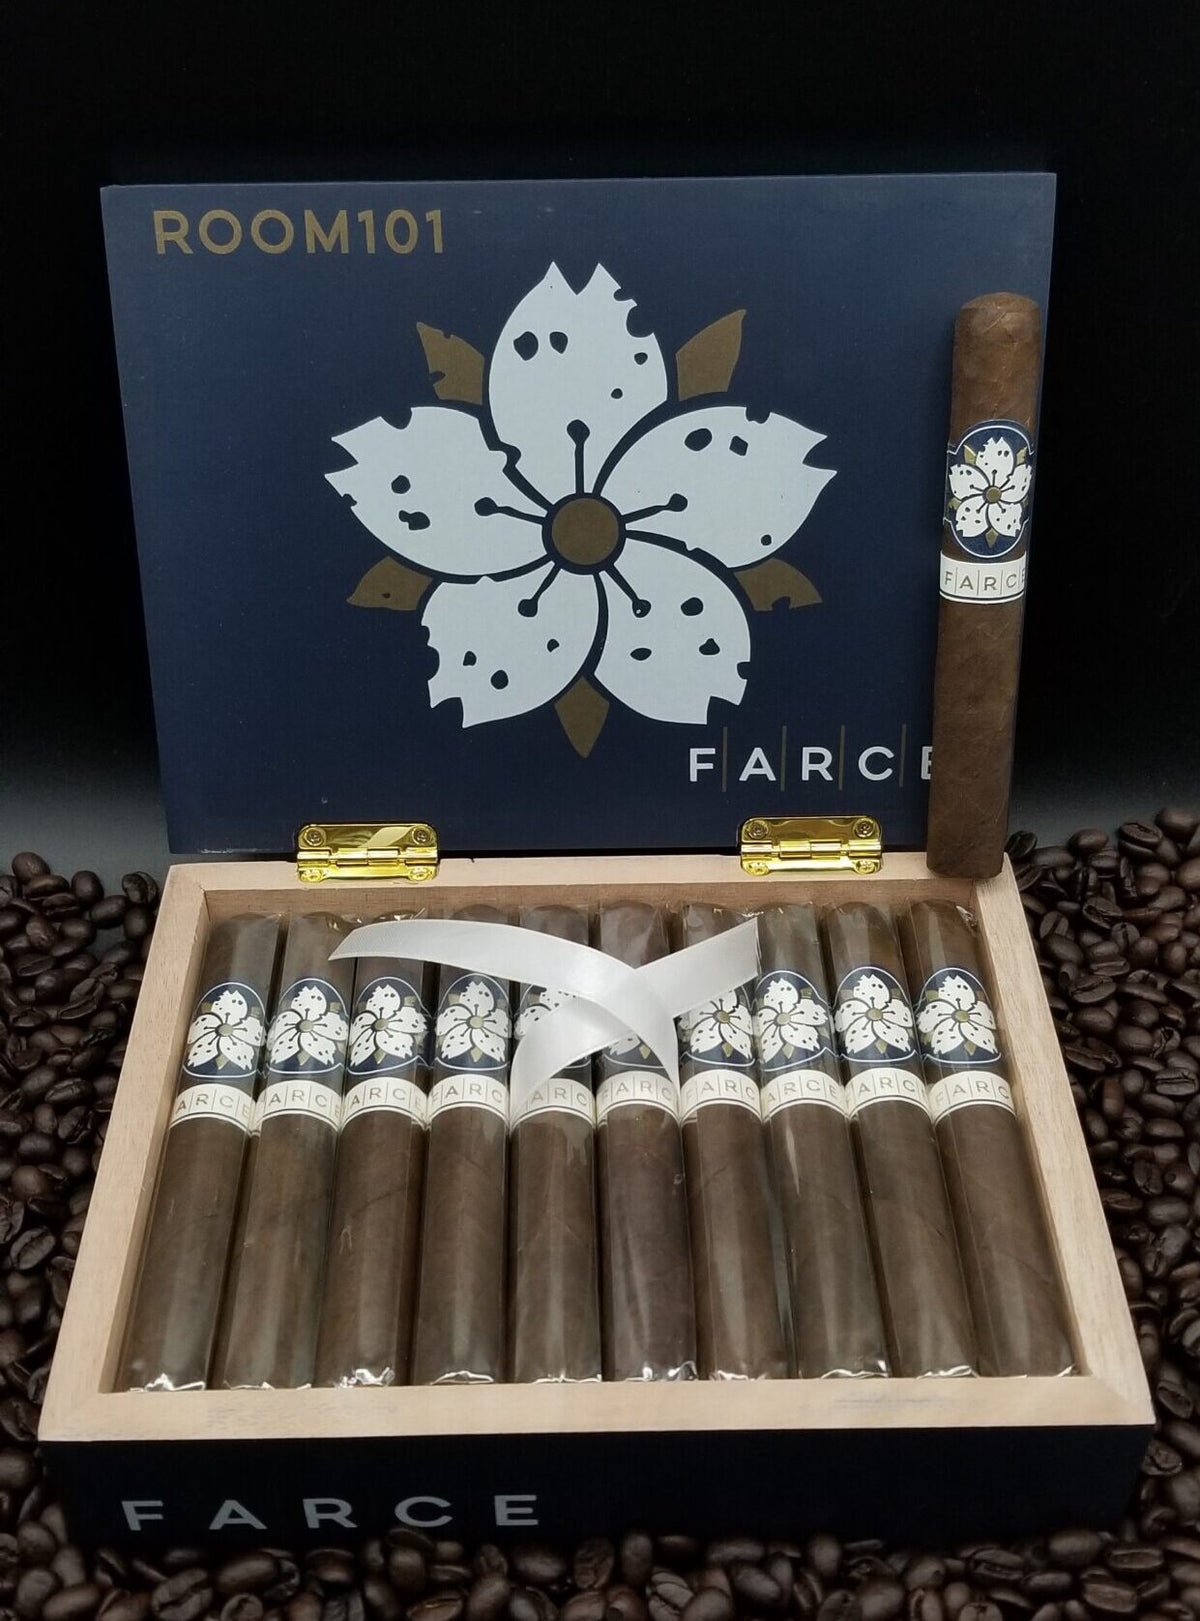 Room 101 Farce Maduro Toro cigars supplied by Sir Louis Cigars